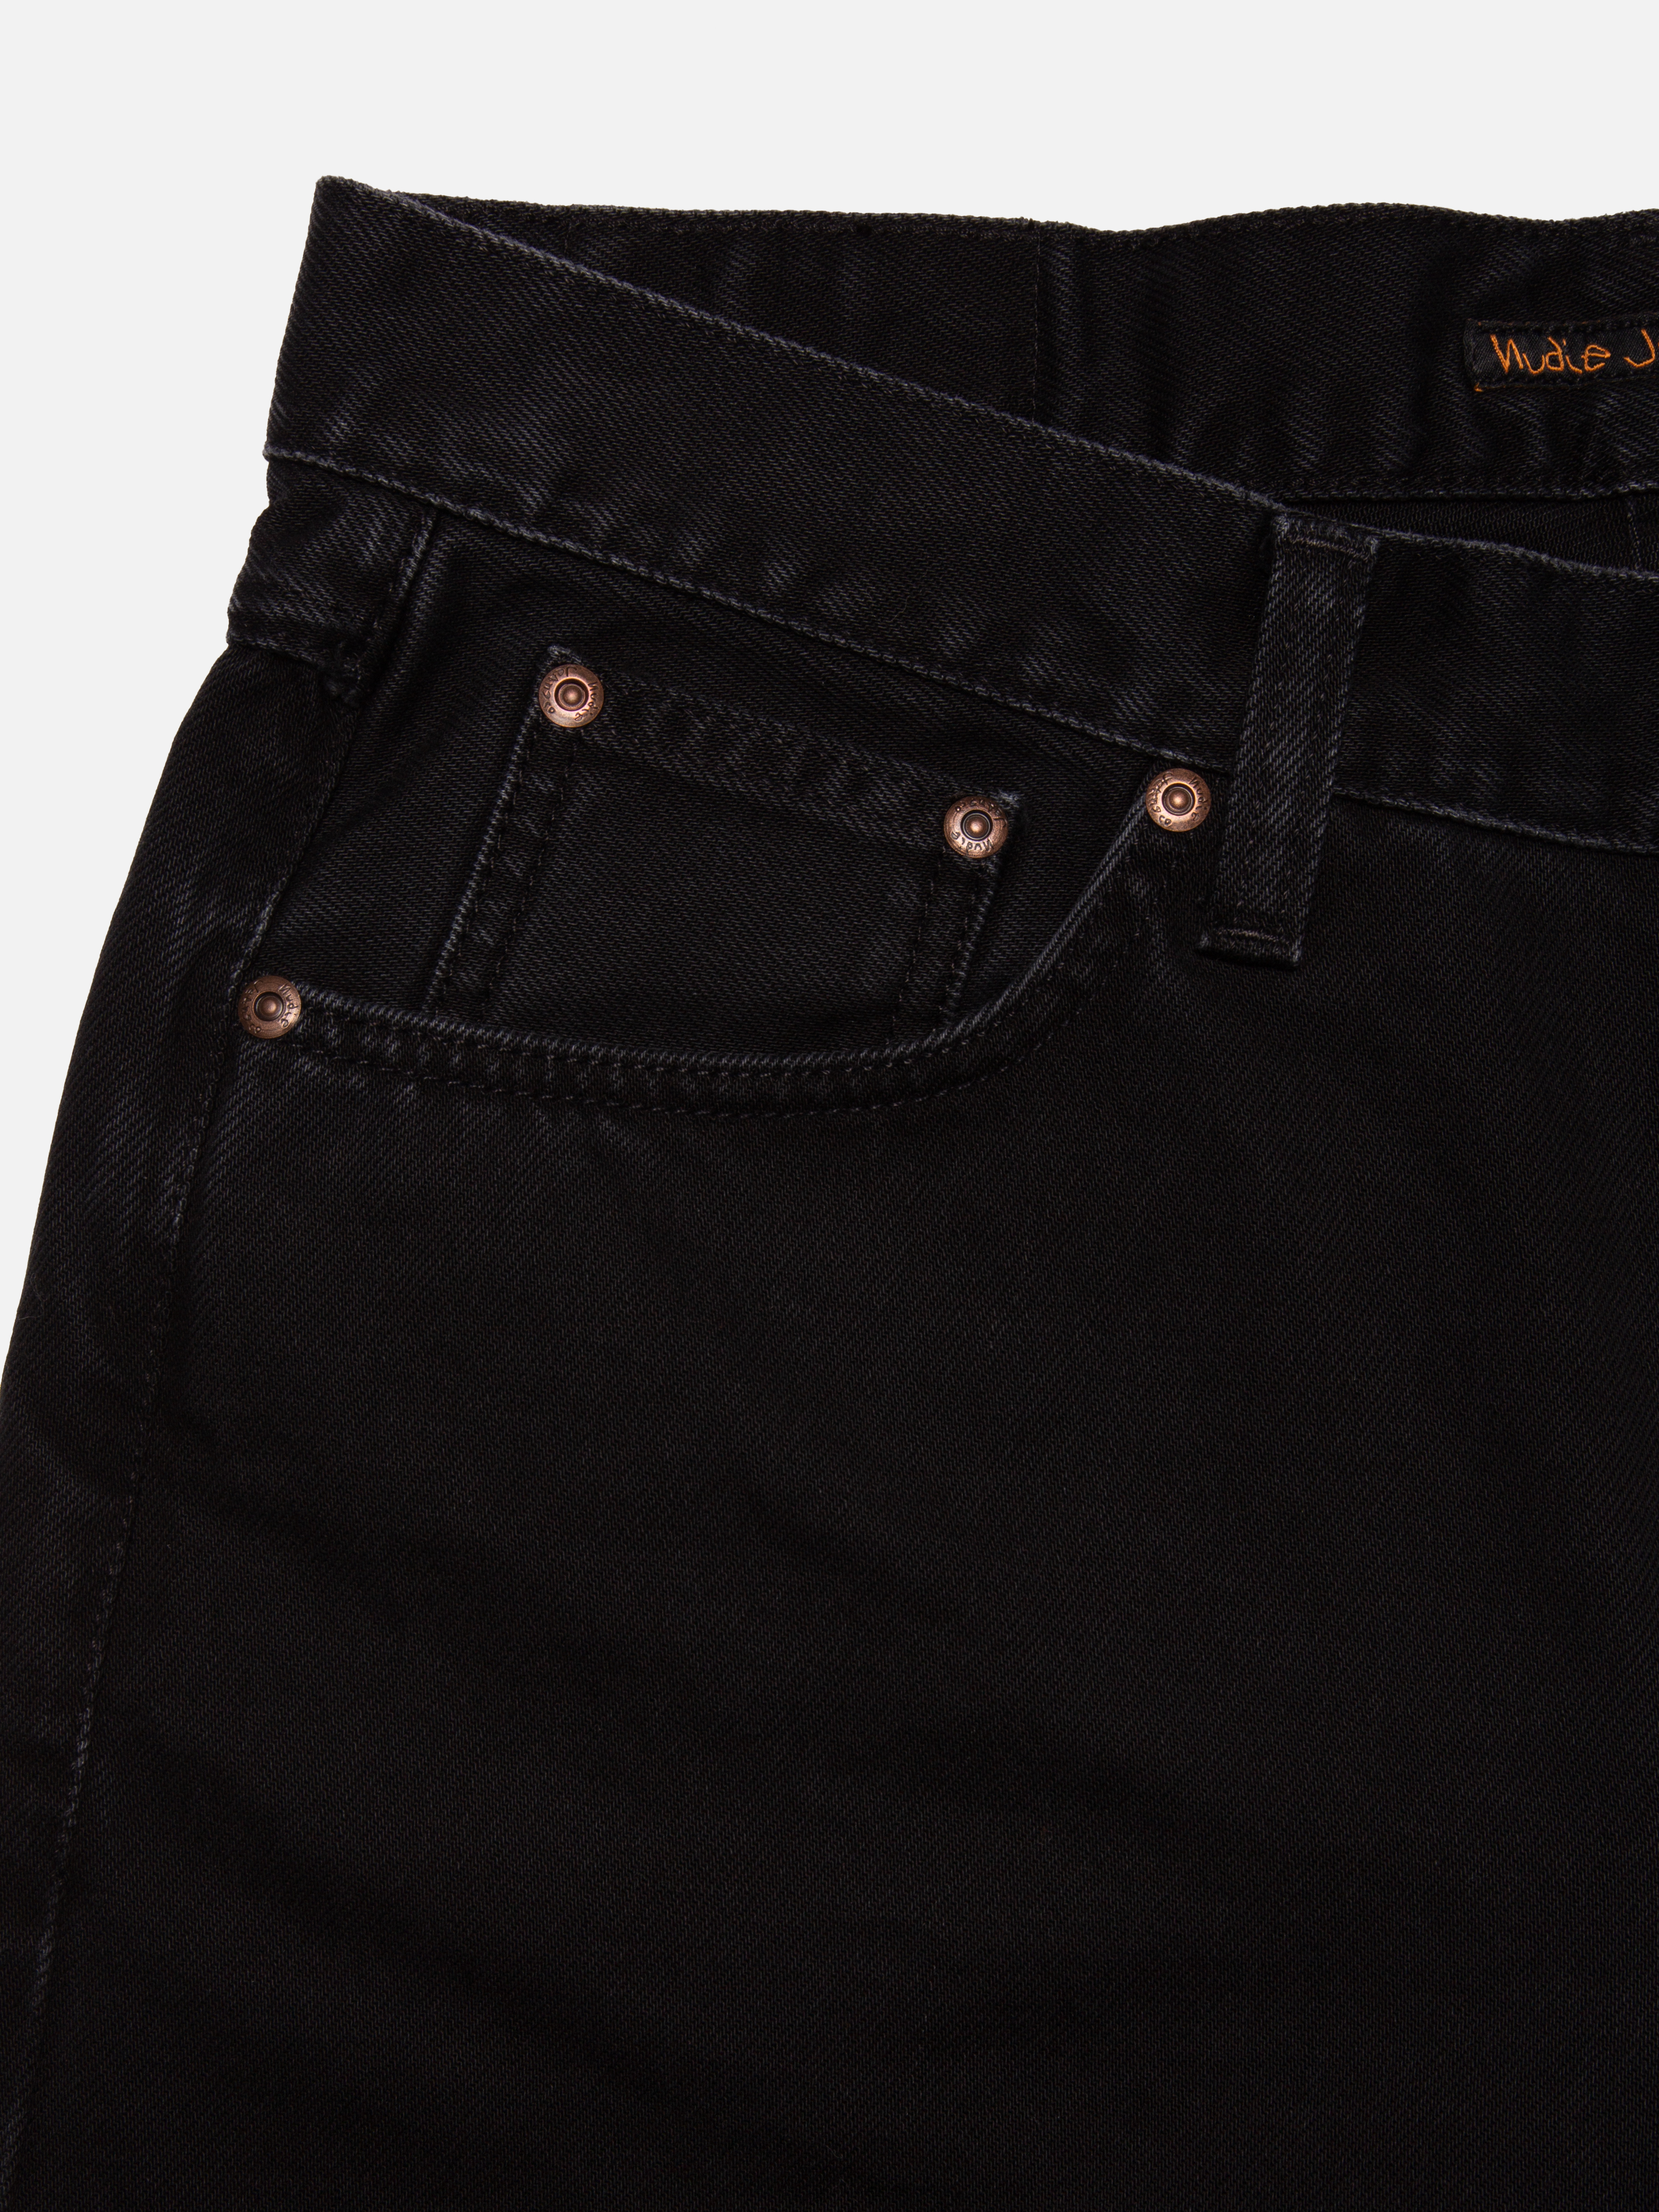 Jeans-Shorts Josh - Aged Black